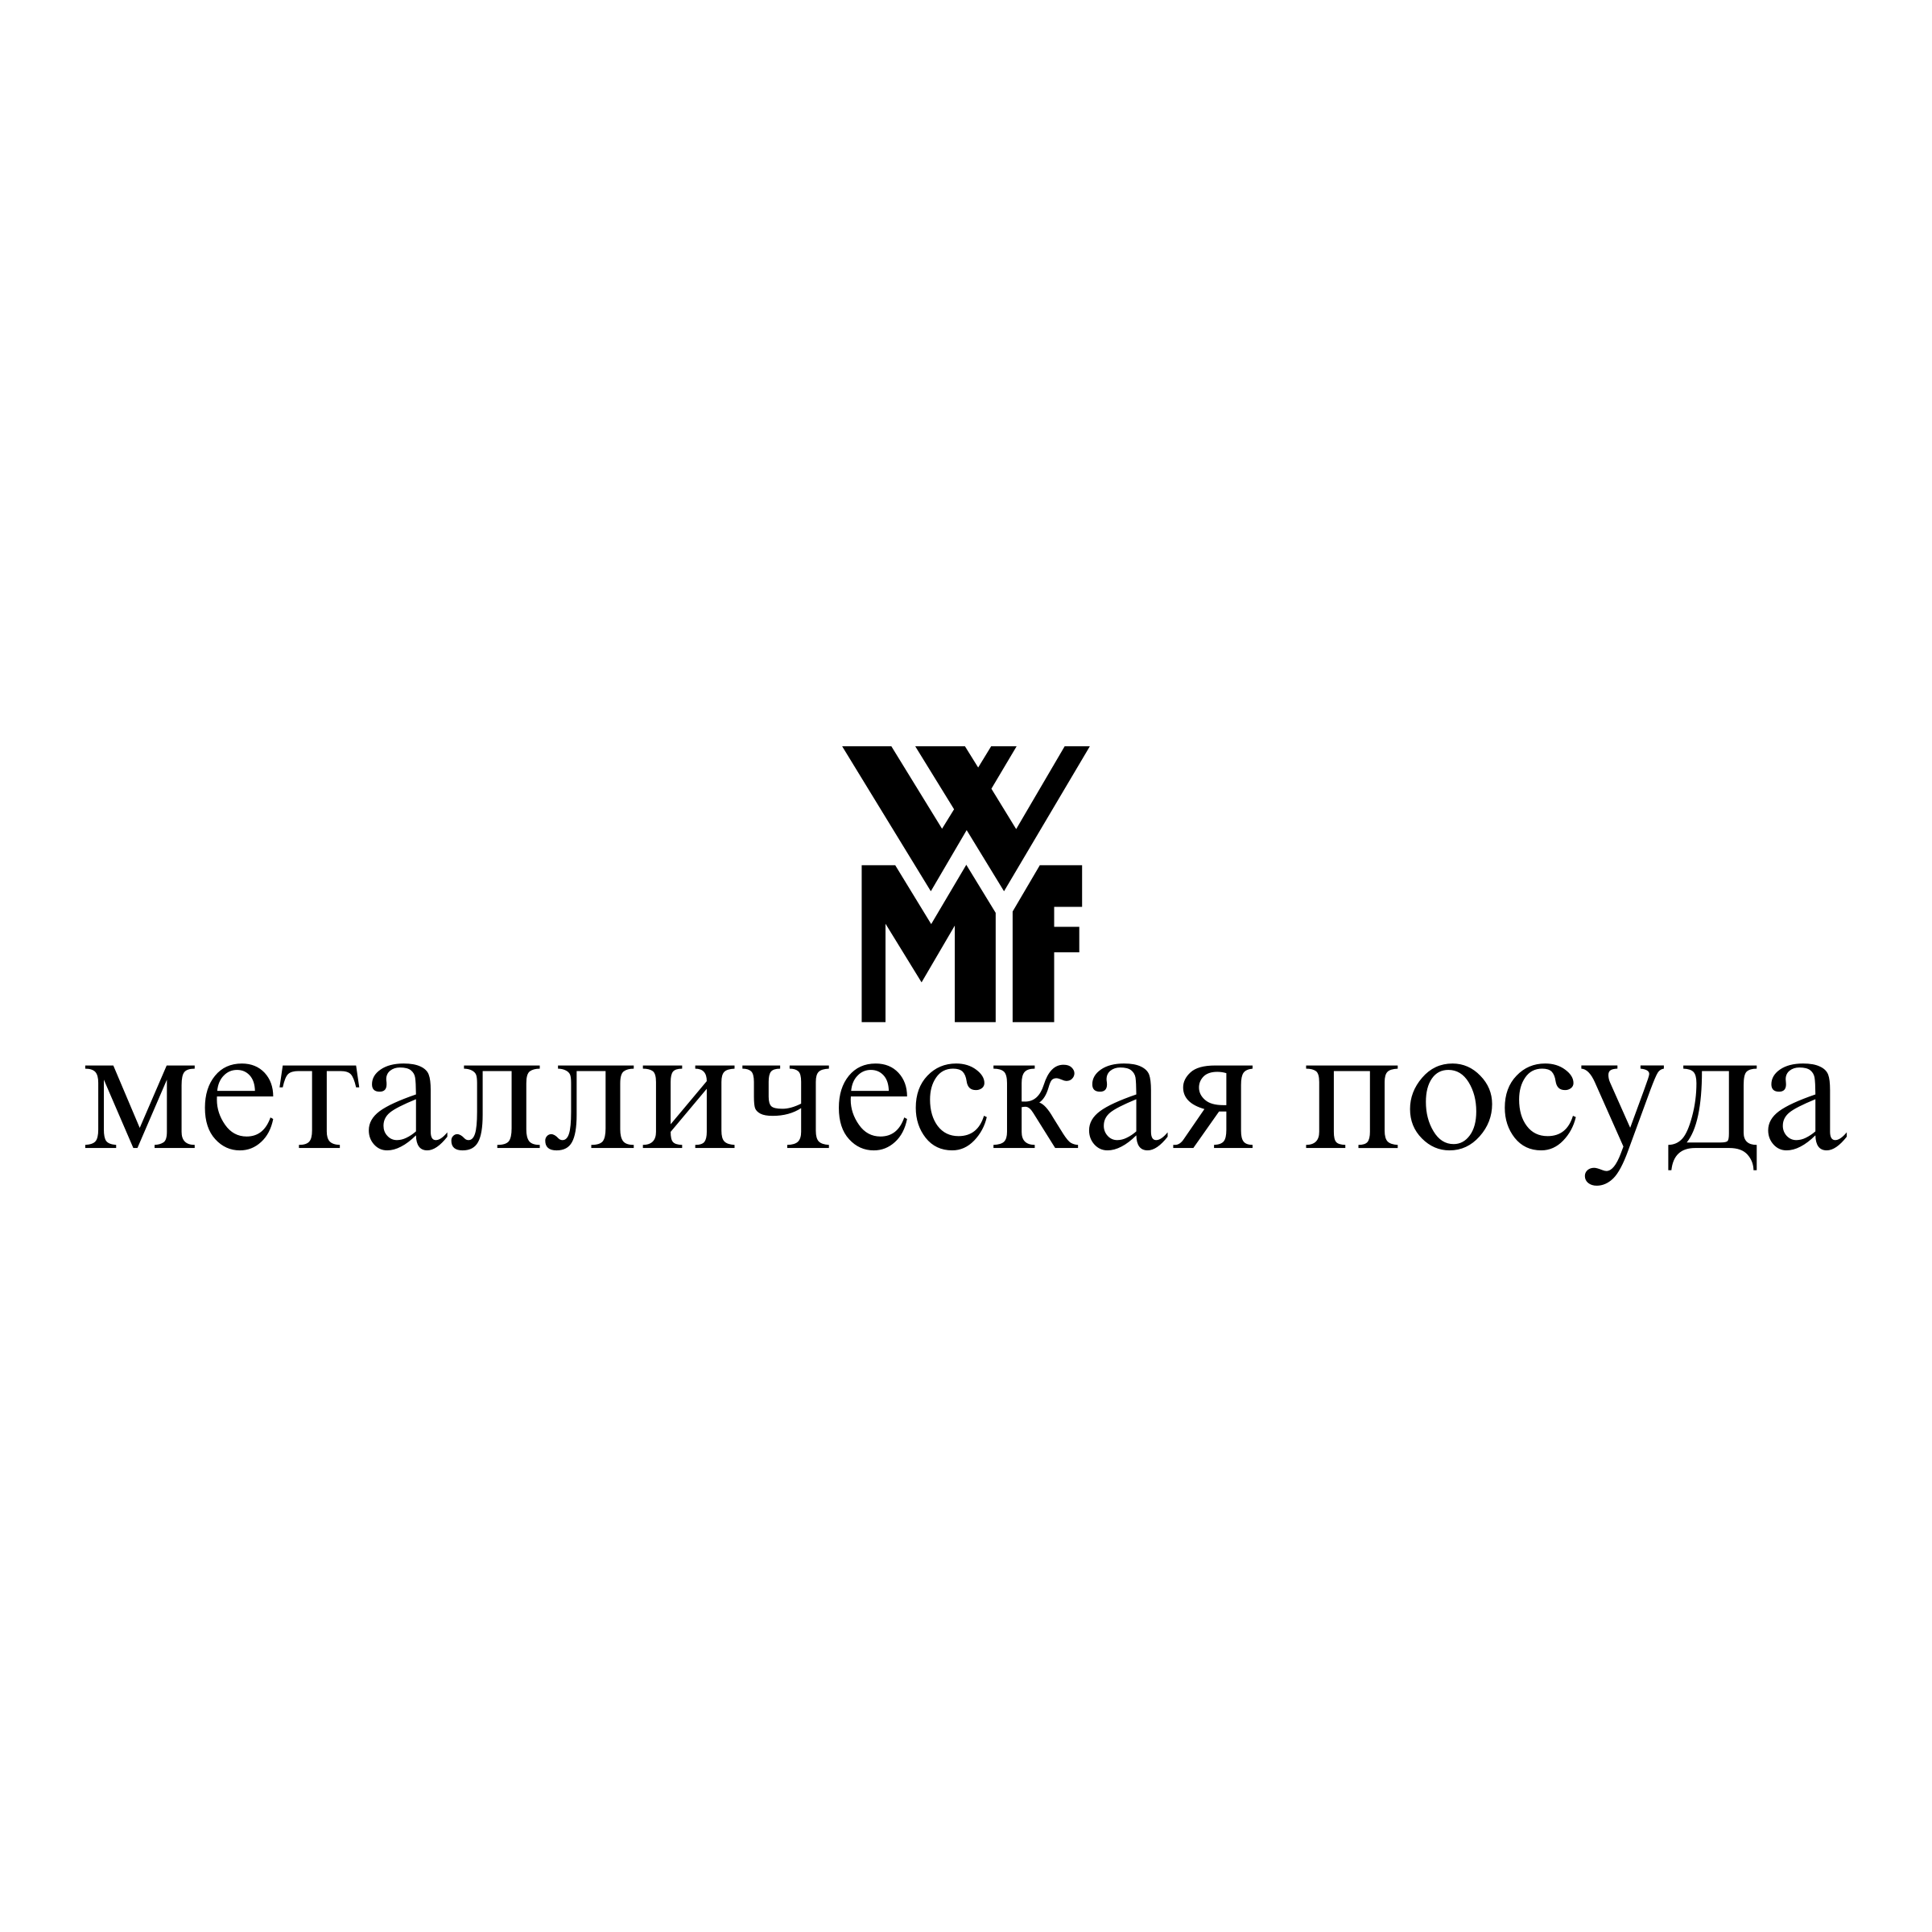 WMF Logo - WMF Logo PNG Transparent & SVG Vector